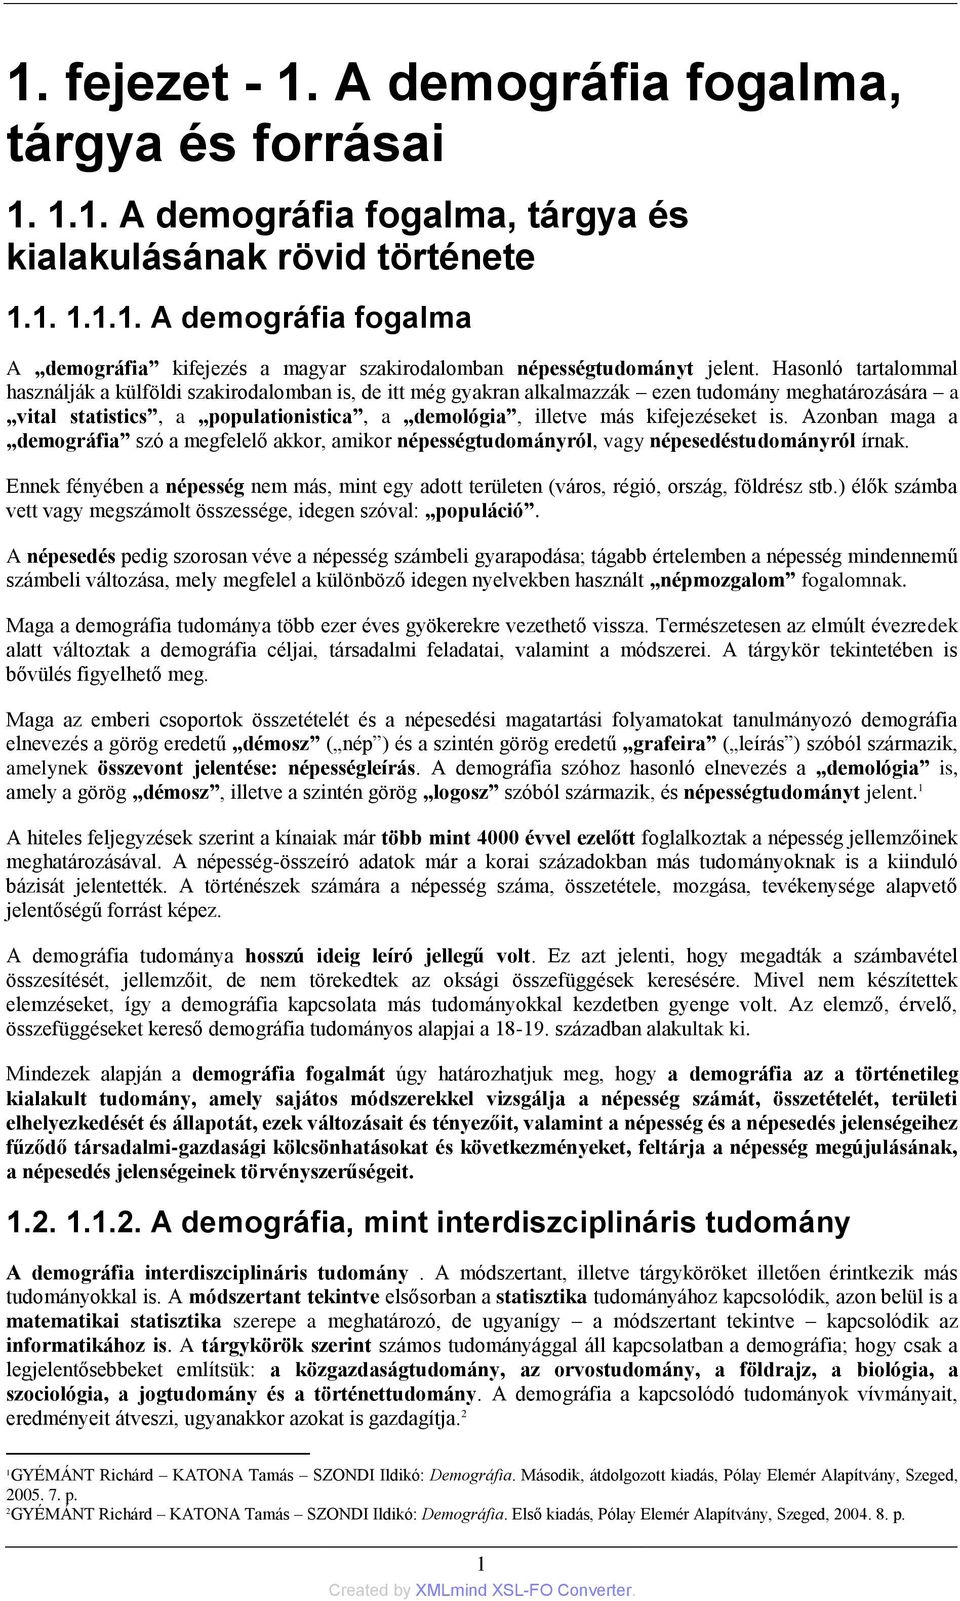 Demográfia Gyémánt Richárd, Katona Tamás - PDF Free Download